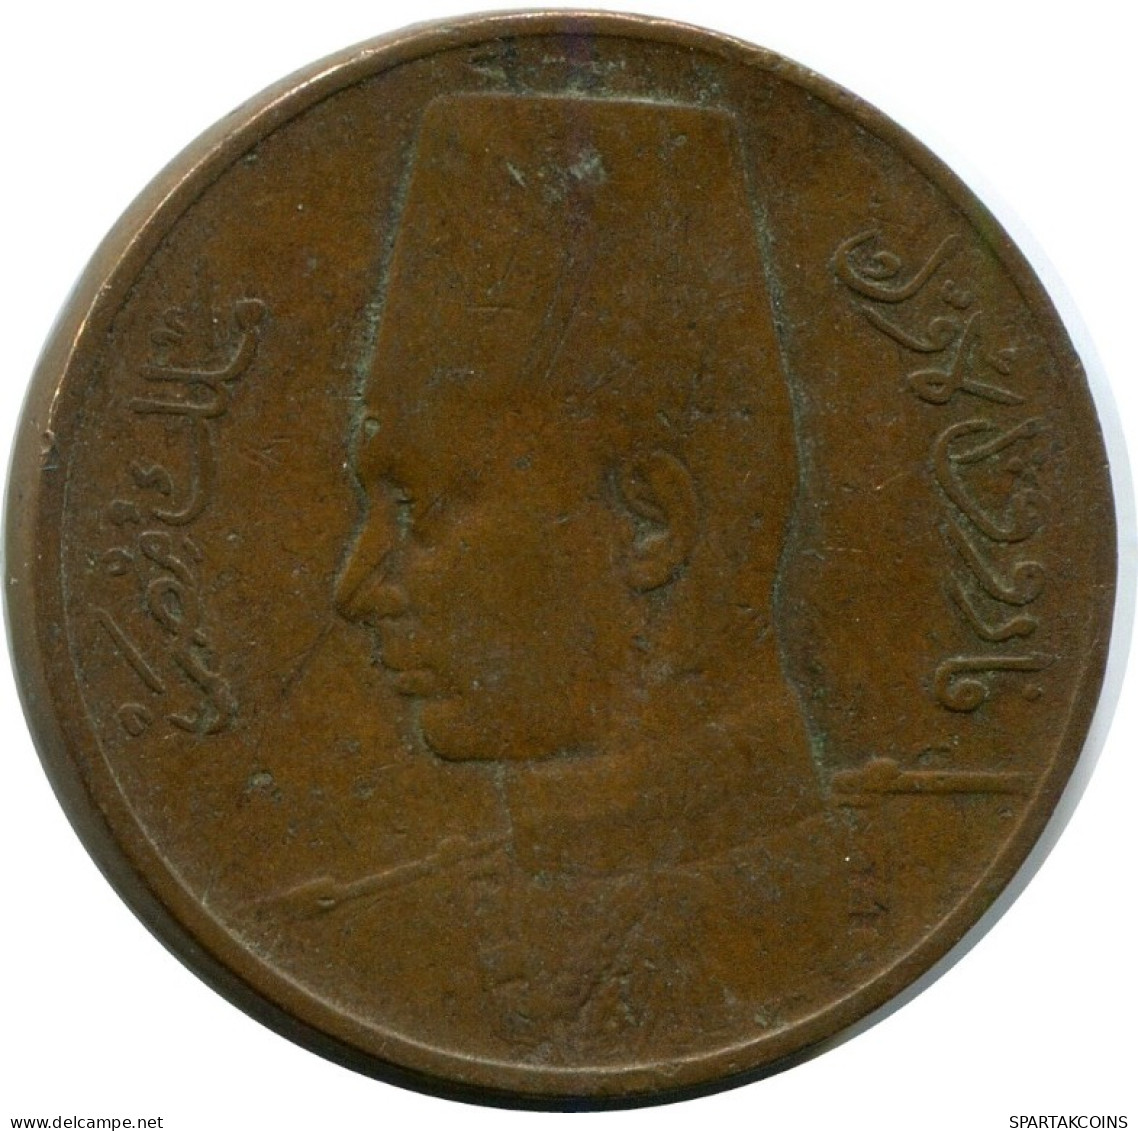 1 MILLIEME 1938 ÄGYPTEN EGYPT Islamisch Münze #AK088.D.A - Egypte